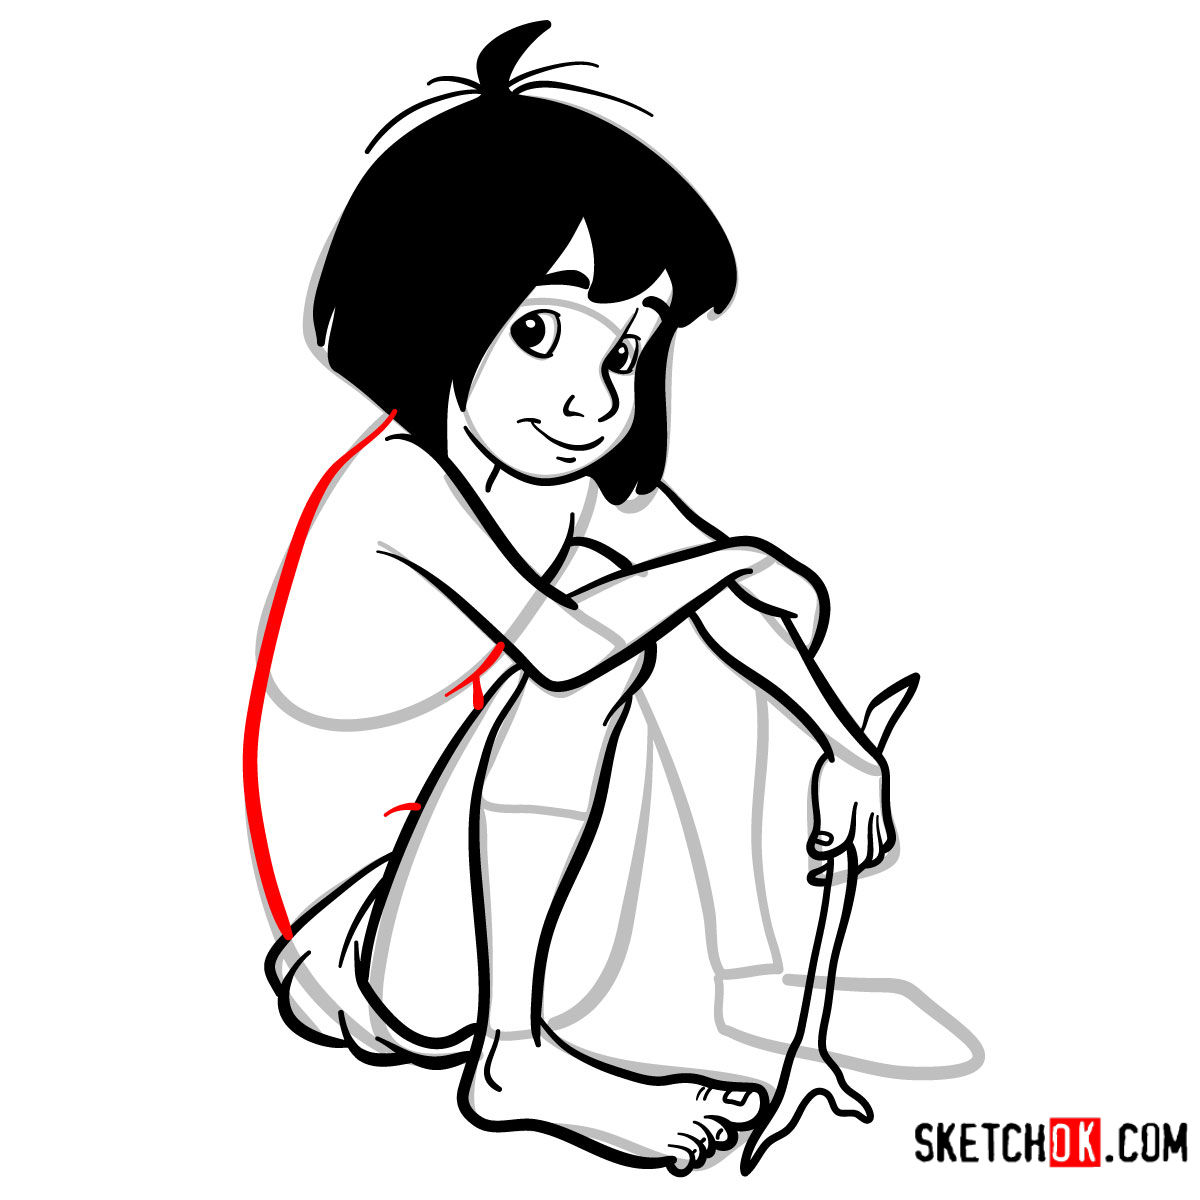 How to draw Mowgli | The Jungle Book - step 11